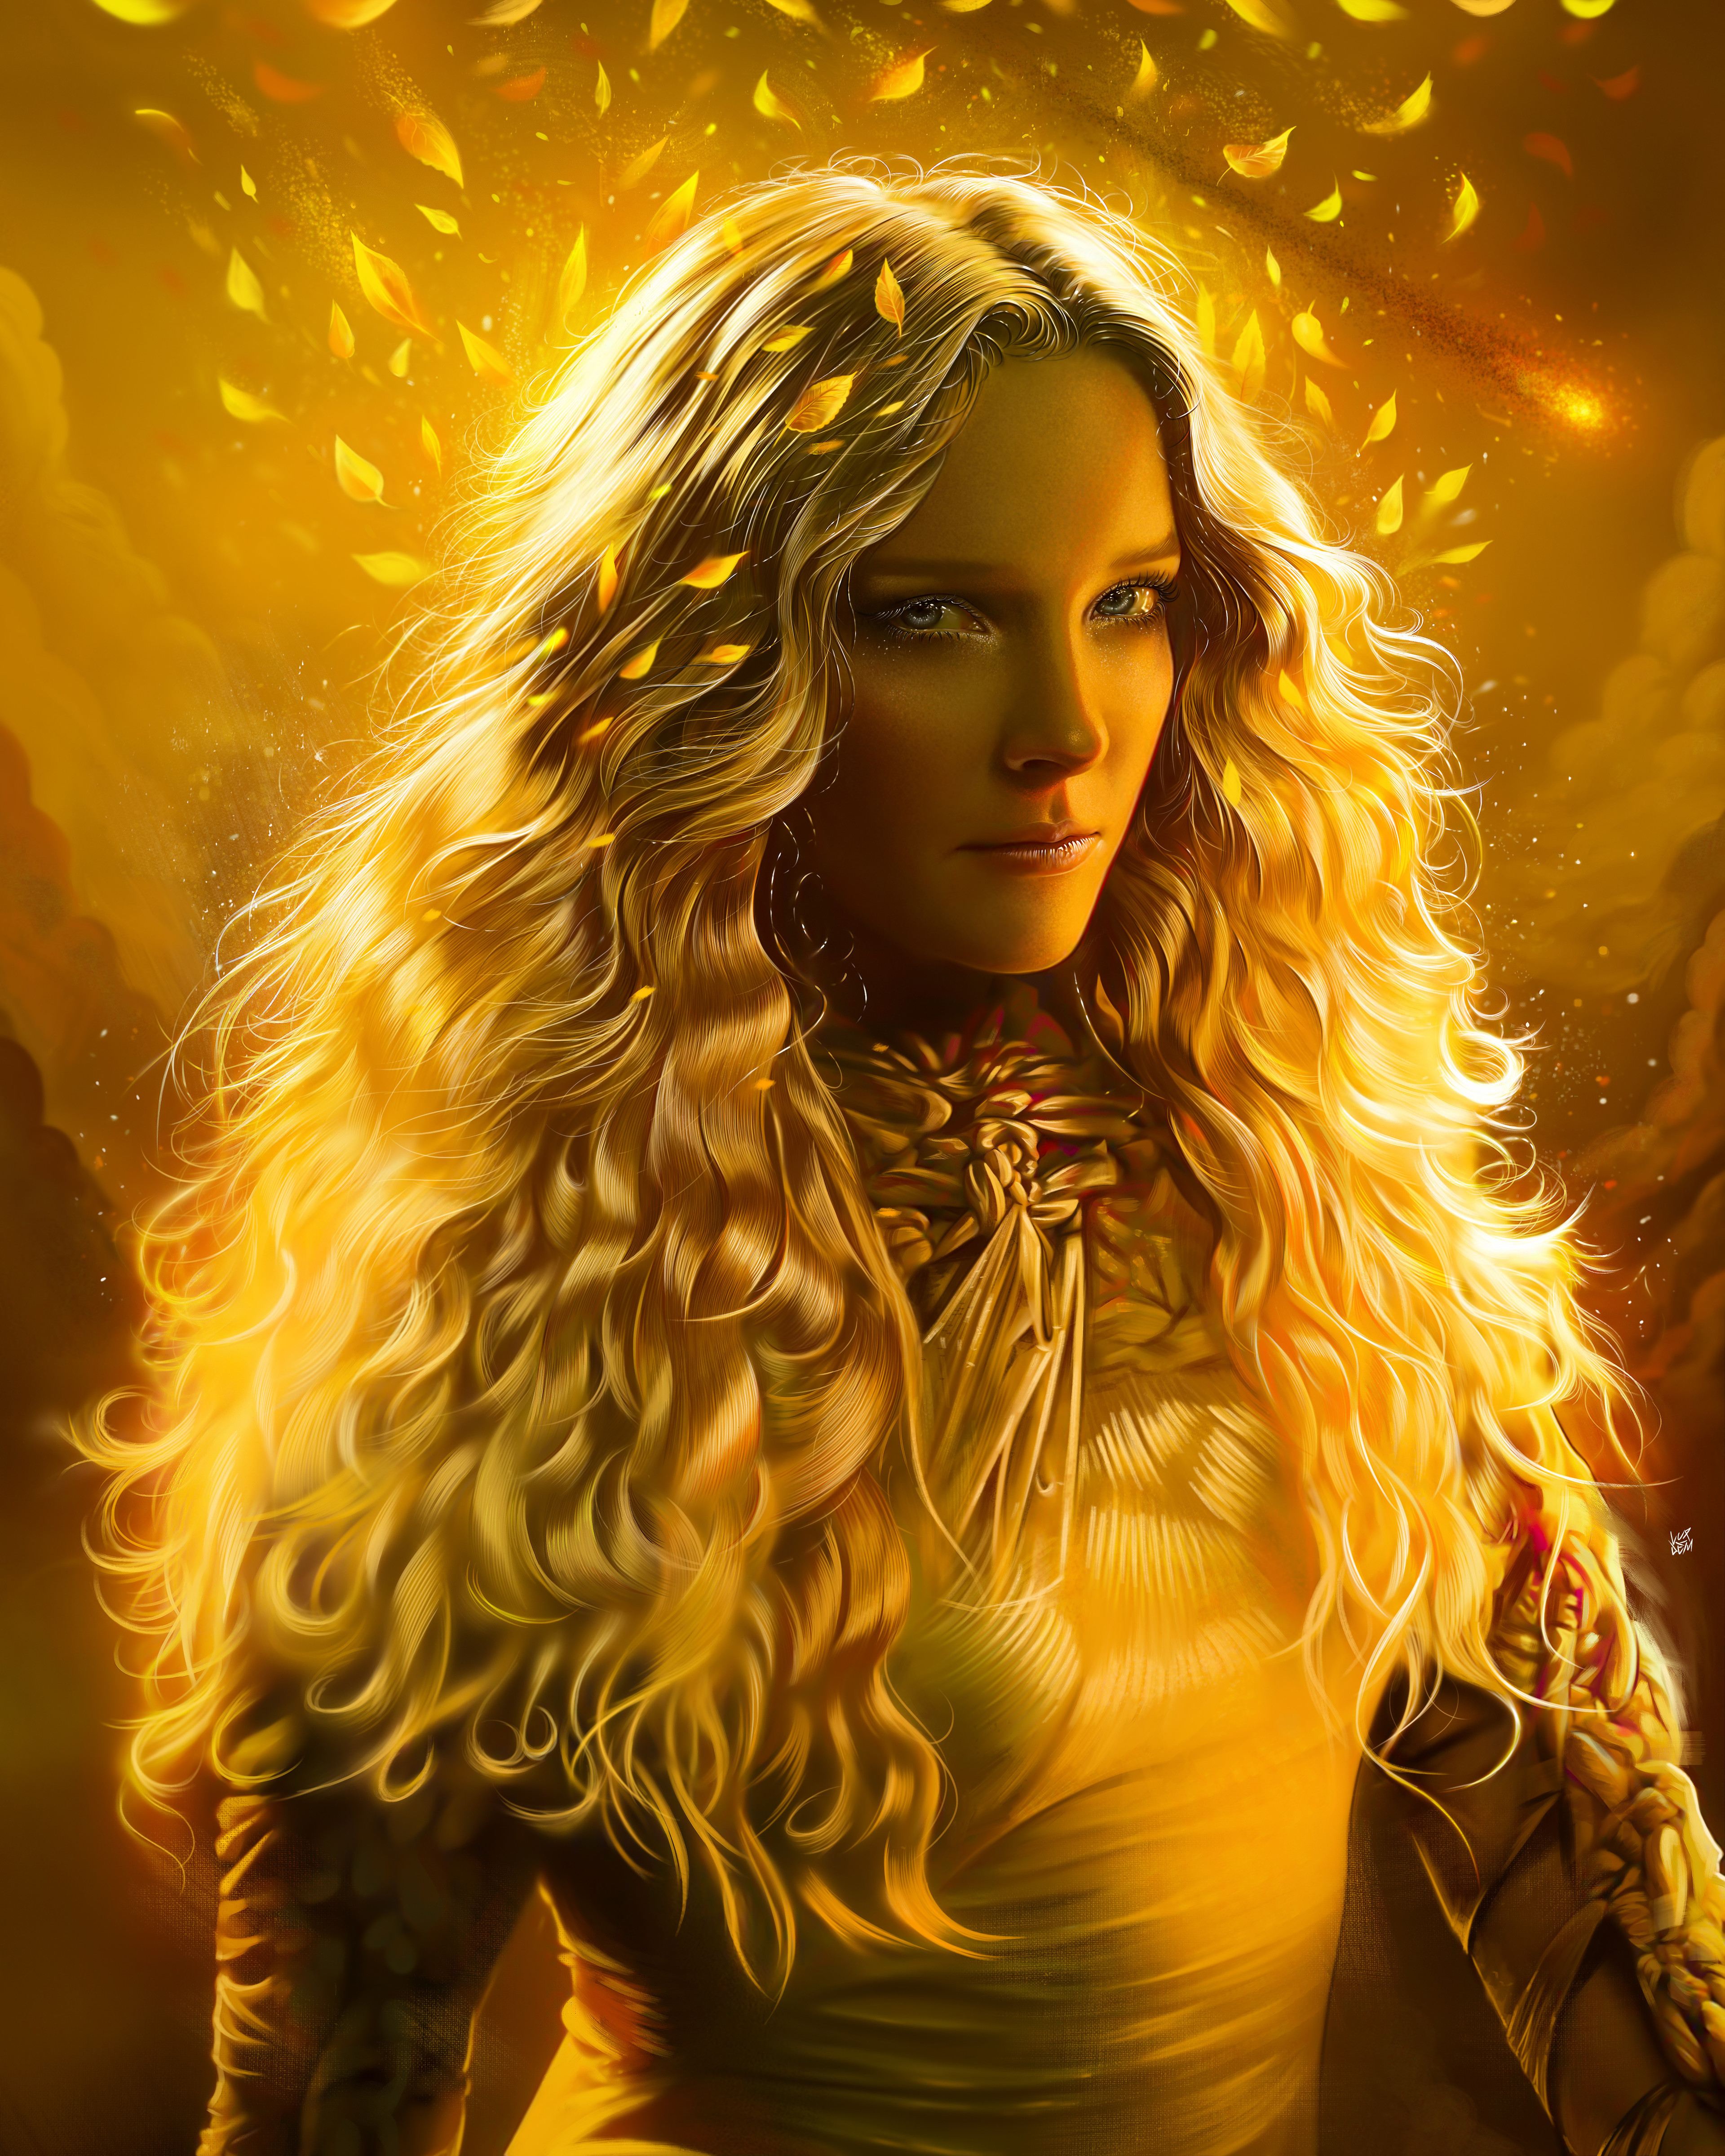 General 3840x4800 The Lord of the Rings blonde Galadriel Rings of Power digital art artwork portrait character design  fan art long hair fantasy girl Yaşar  Vurdem Morfydd Clark